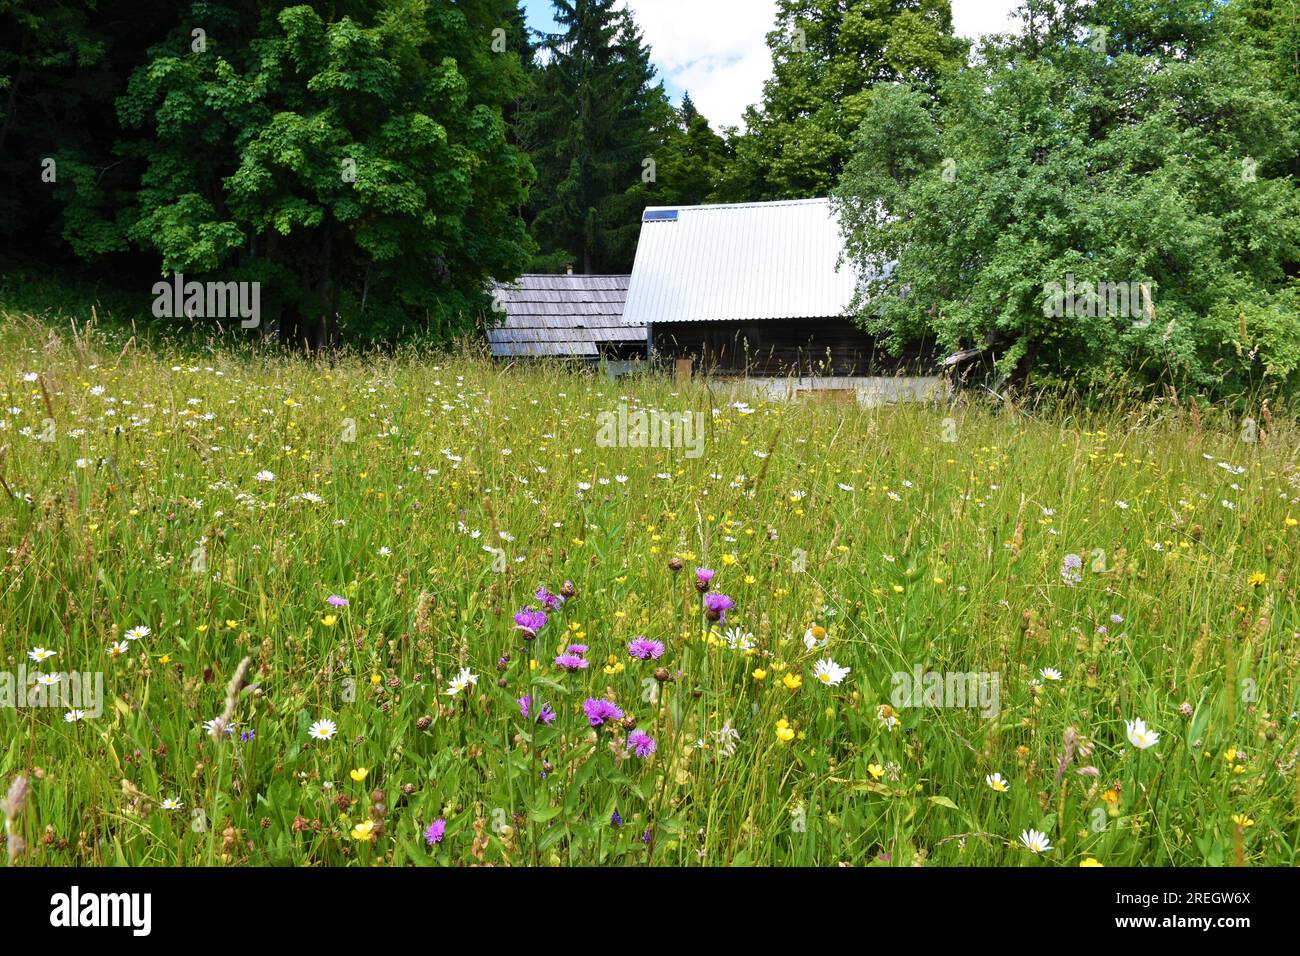 Meadow Javornica at Pokljuka, Slovenia with old huts short-fringed knapweed (Centaurea nigrescens) flowers Stock Photo